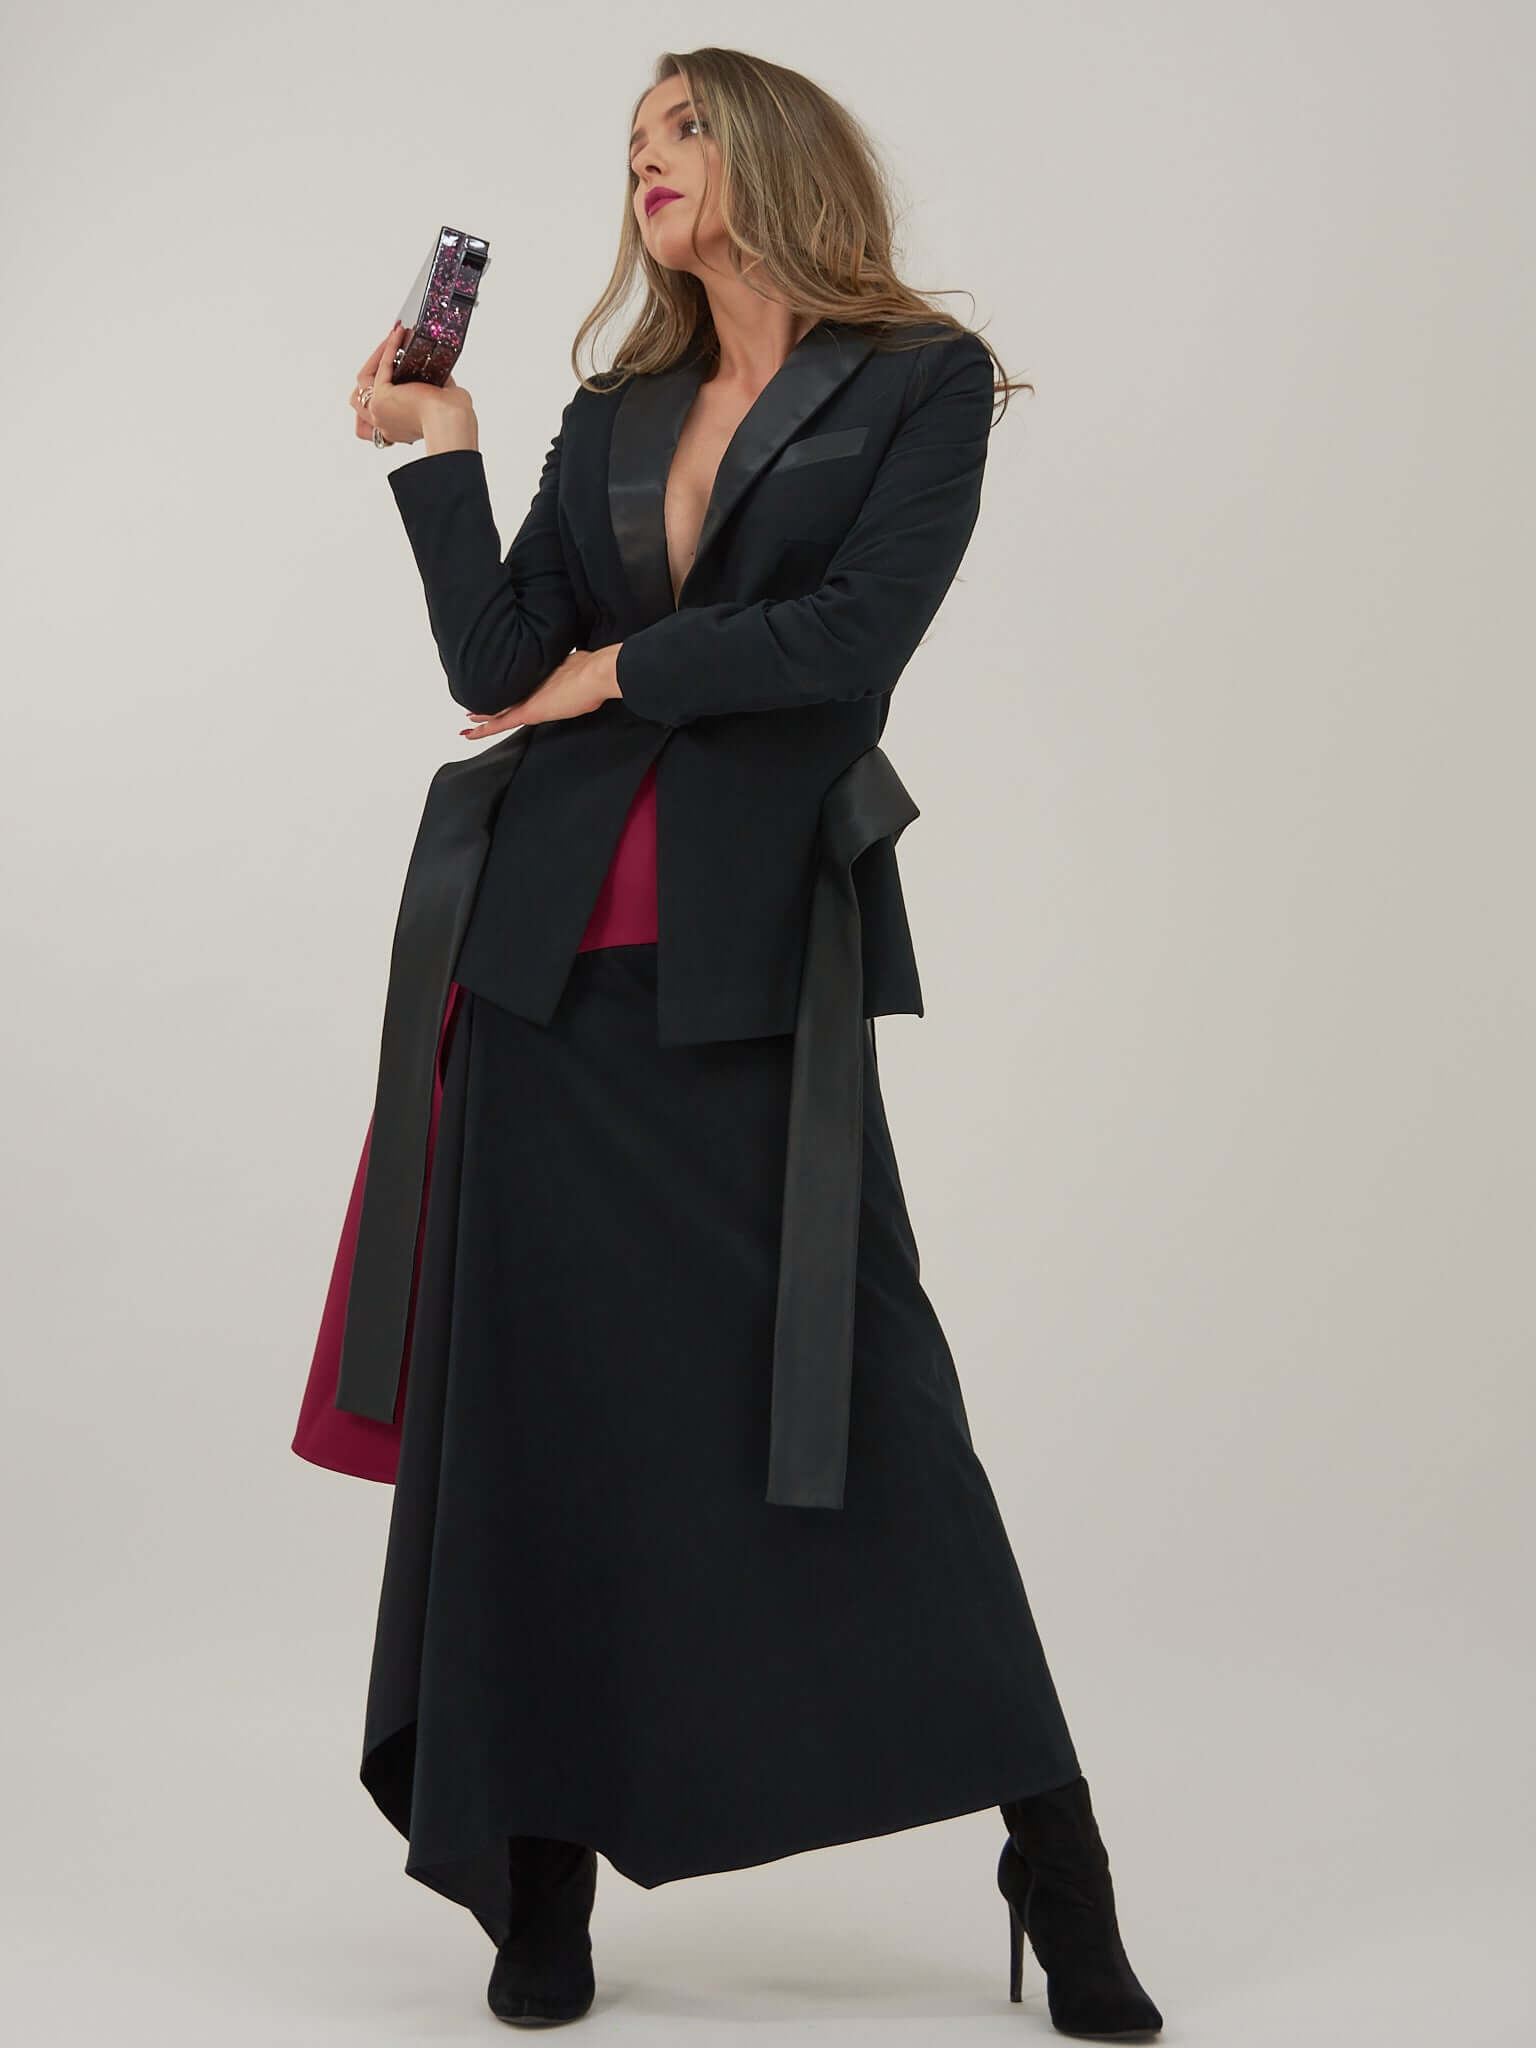 Suit It Up Classic Blazer with Satin Details by Tia Dorraine Women's Luxury Fashion Designer Clothing Brand